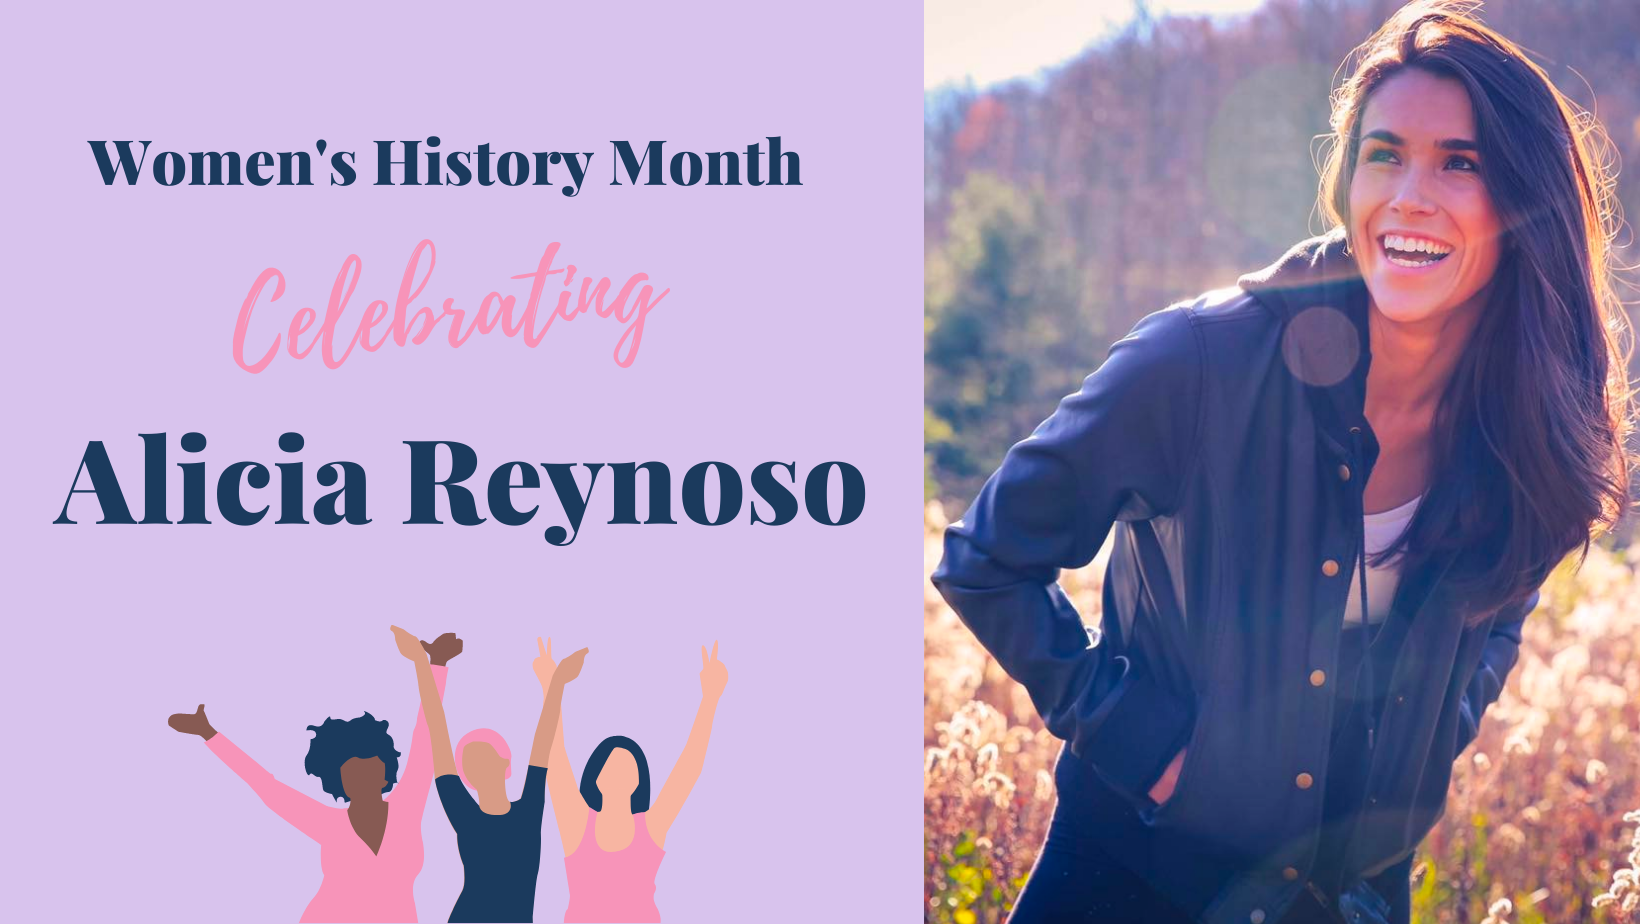 Women's History Month - Celebrating Alicia Reynoso!